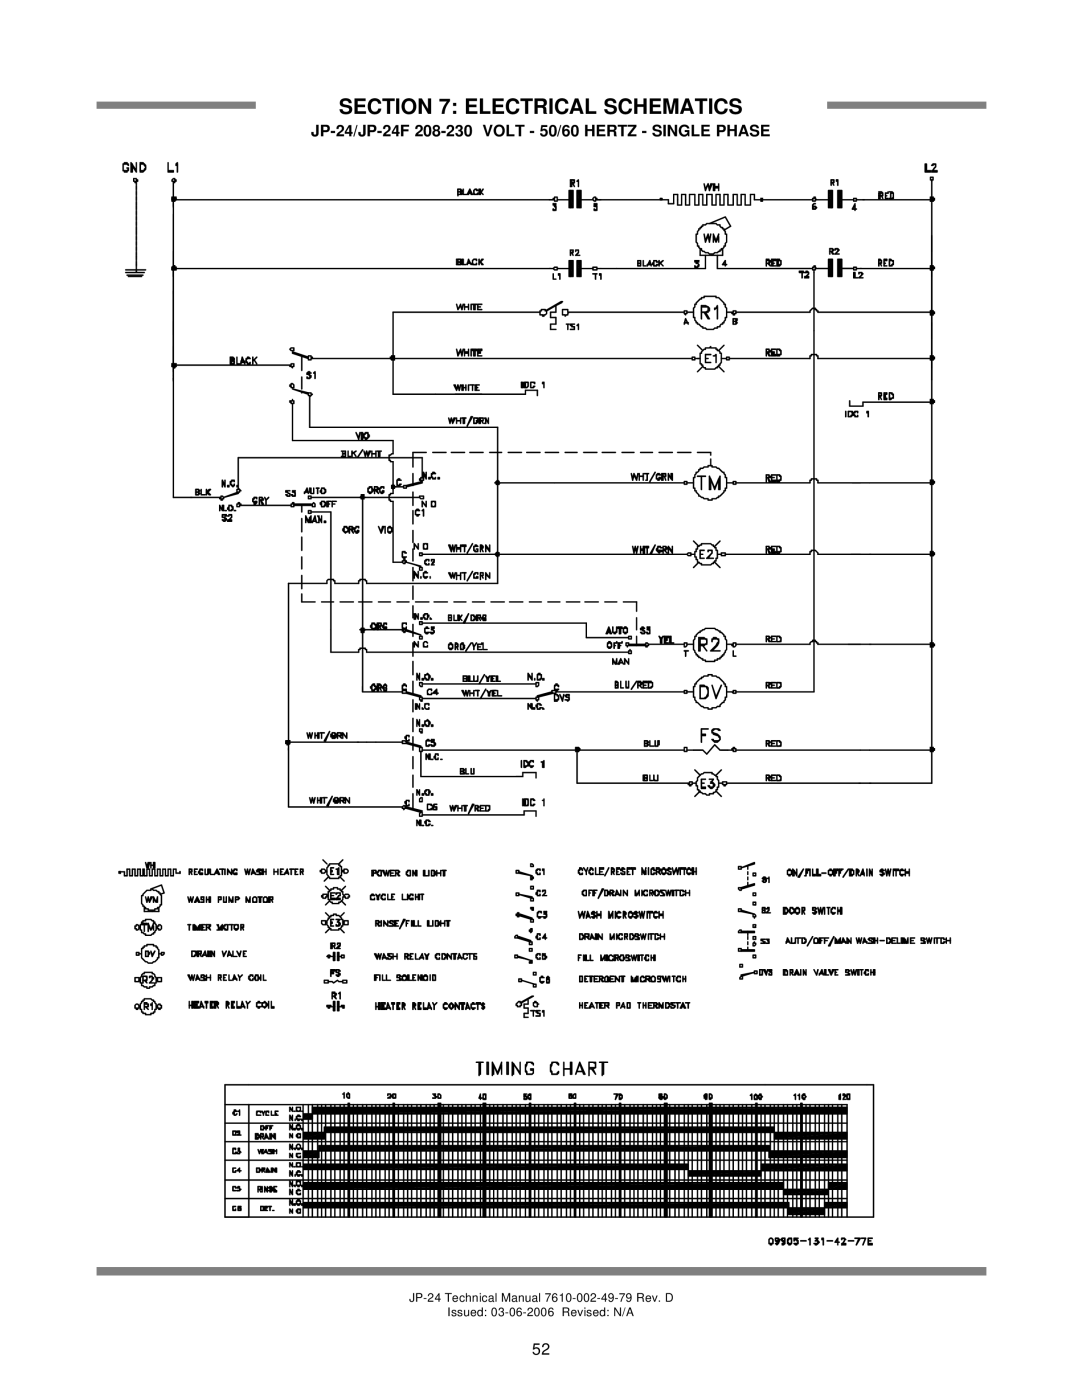 Jackson Electrical Schematics, JP-24/JP-24F 208-230 VOLT - 50/60 HERTZ - SINGLE PHASE, Issued 03-06-2006 Revised N/A 